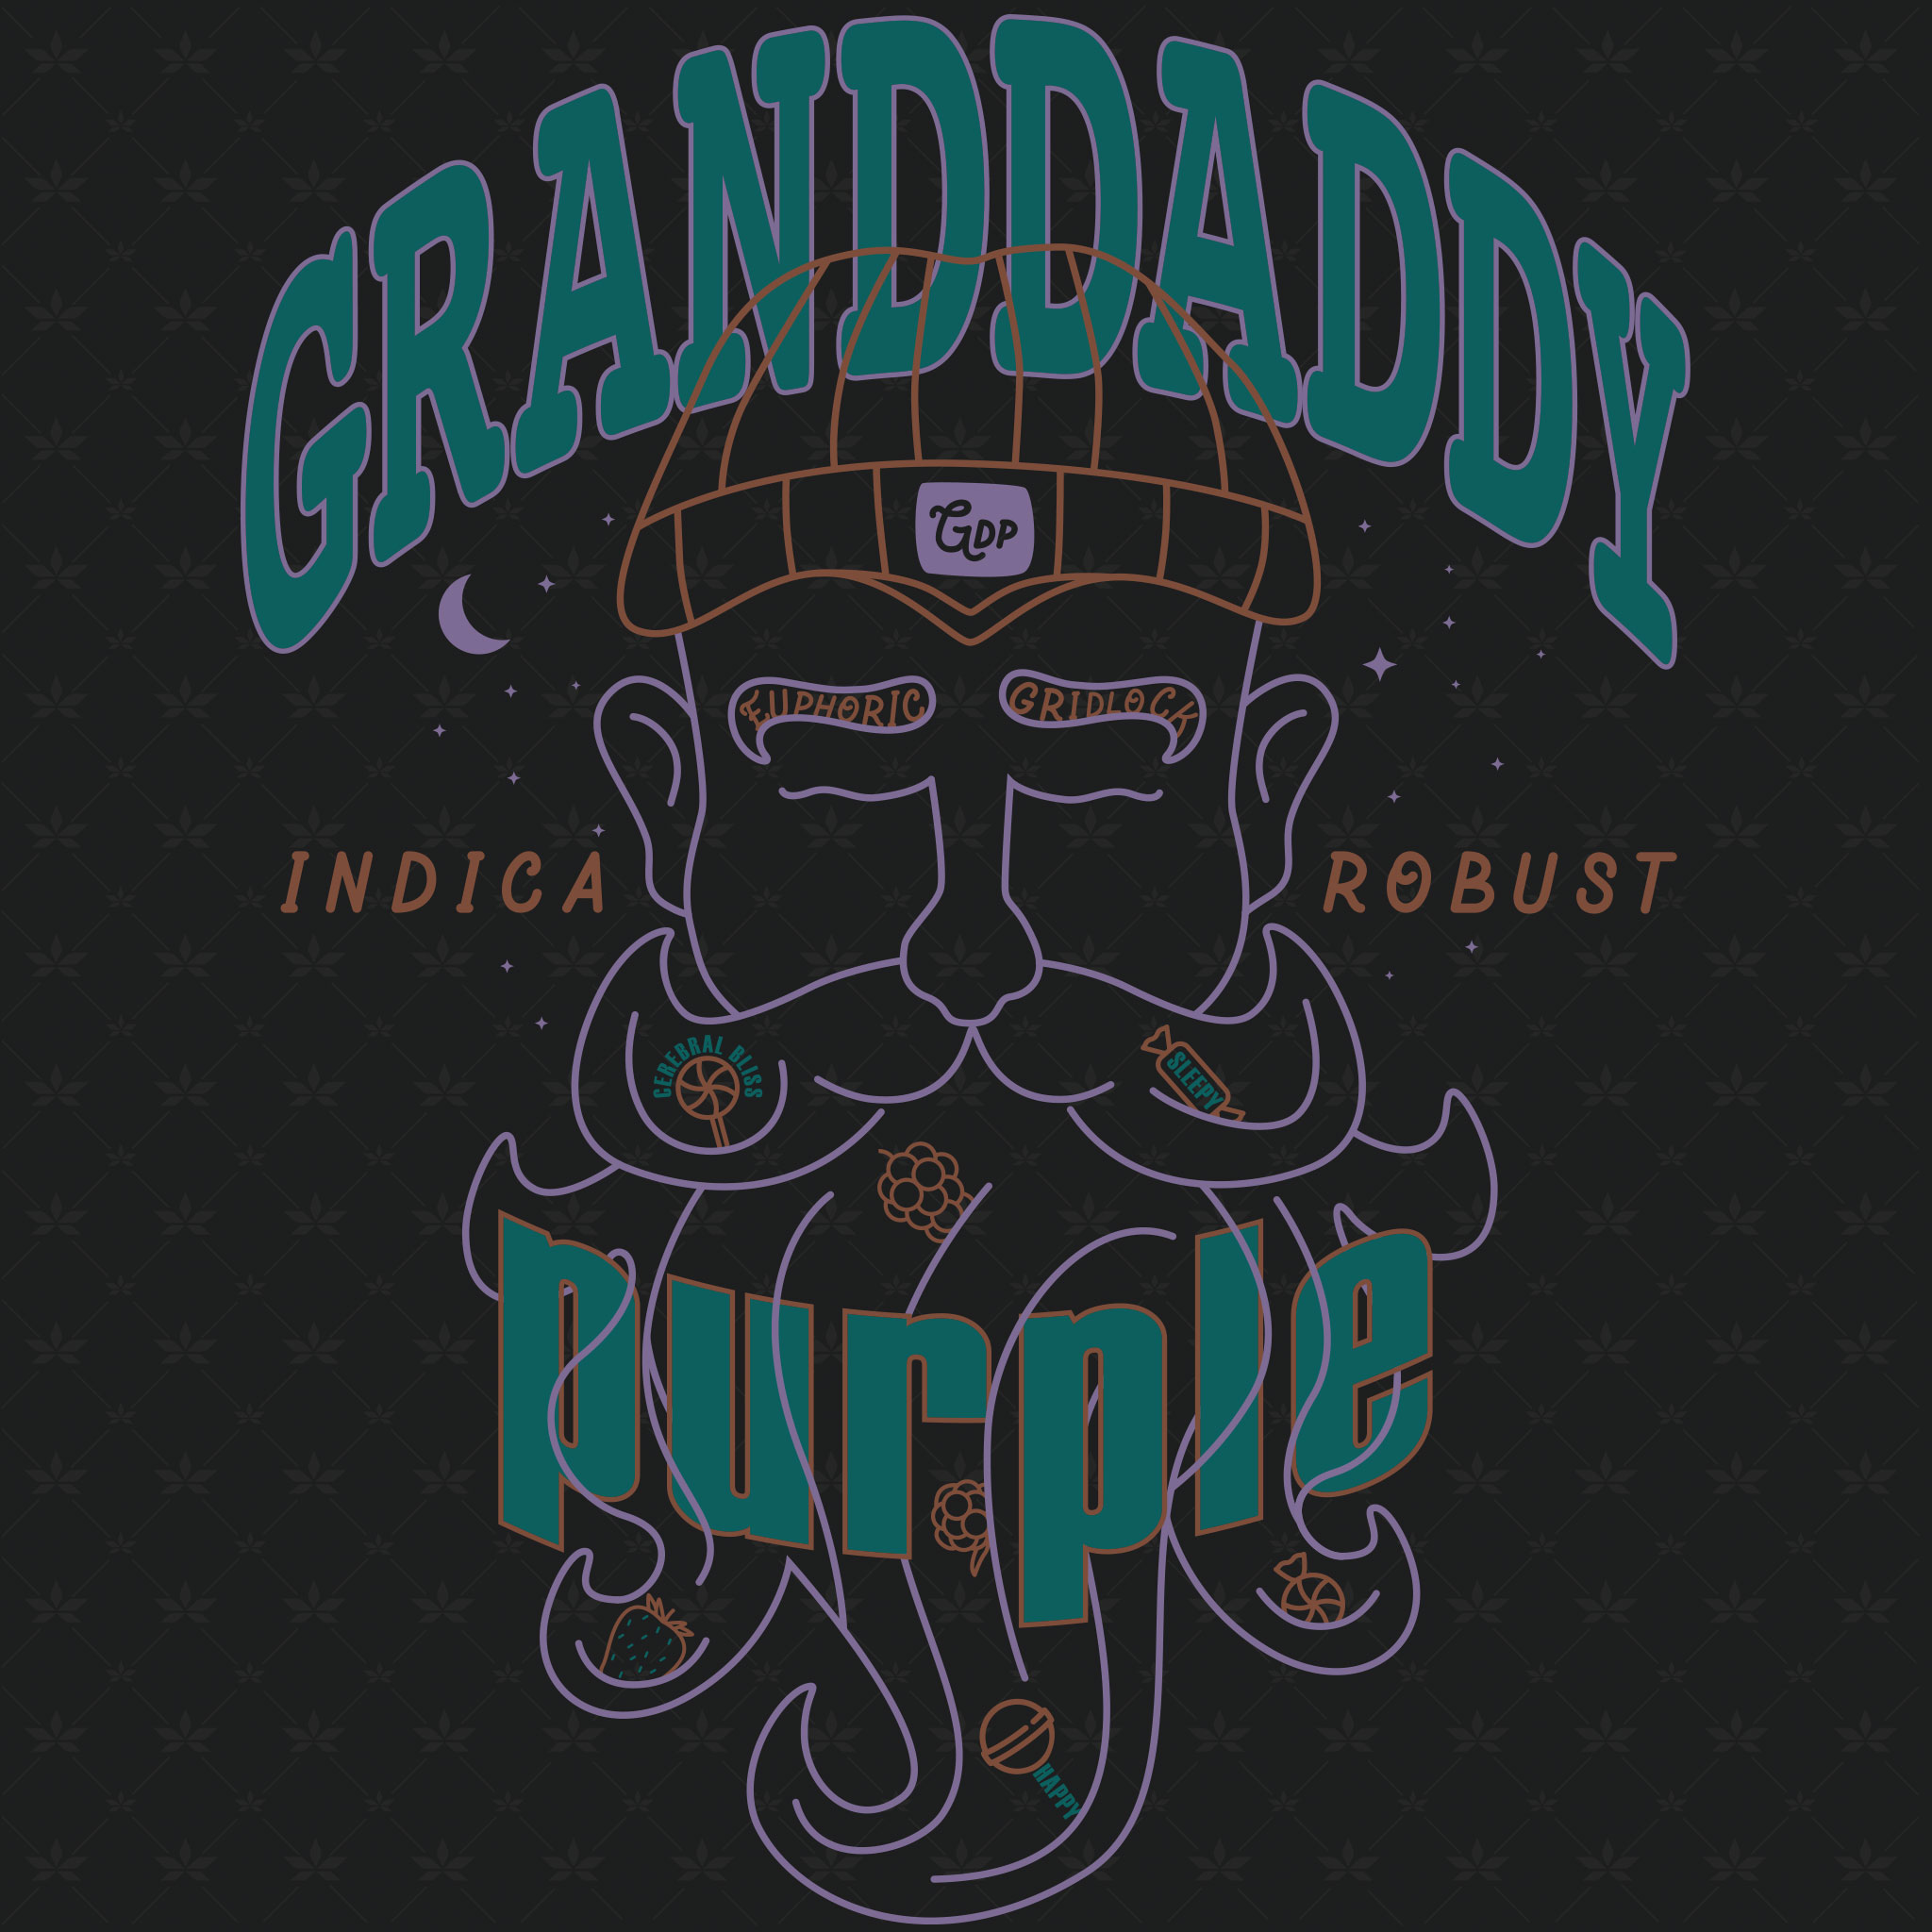 Granddaddy Purple Strain